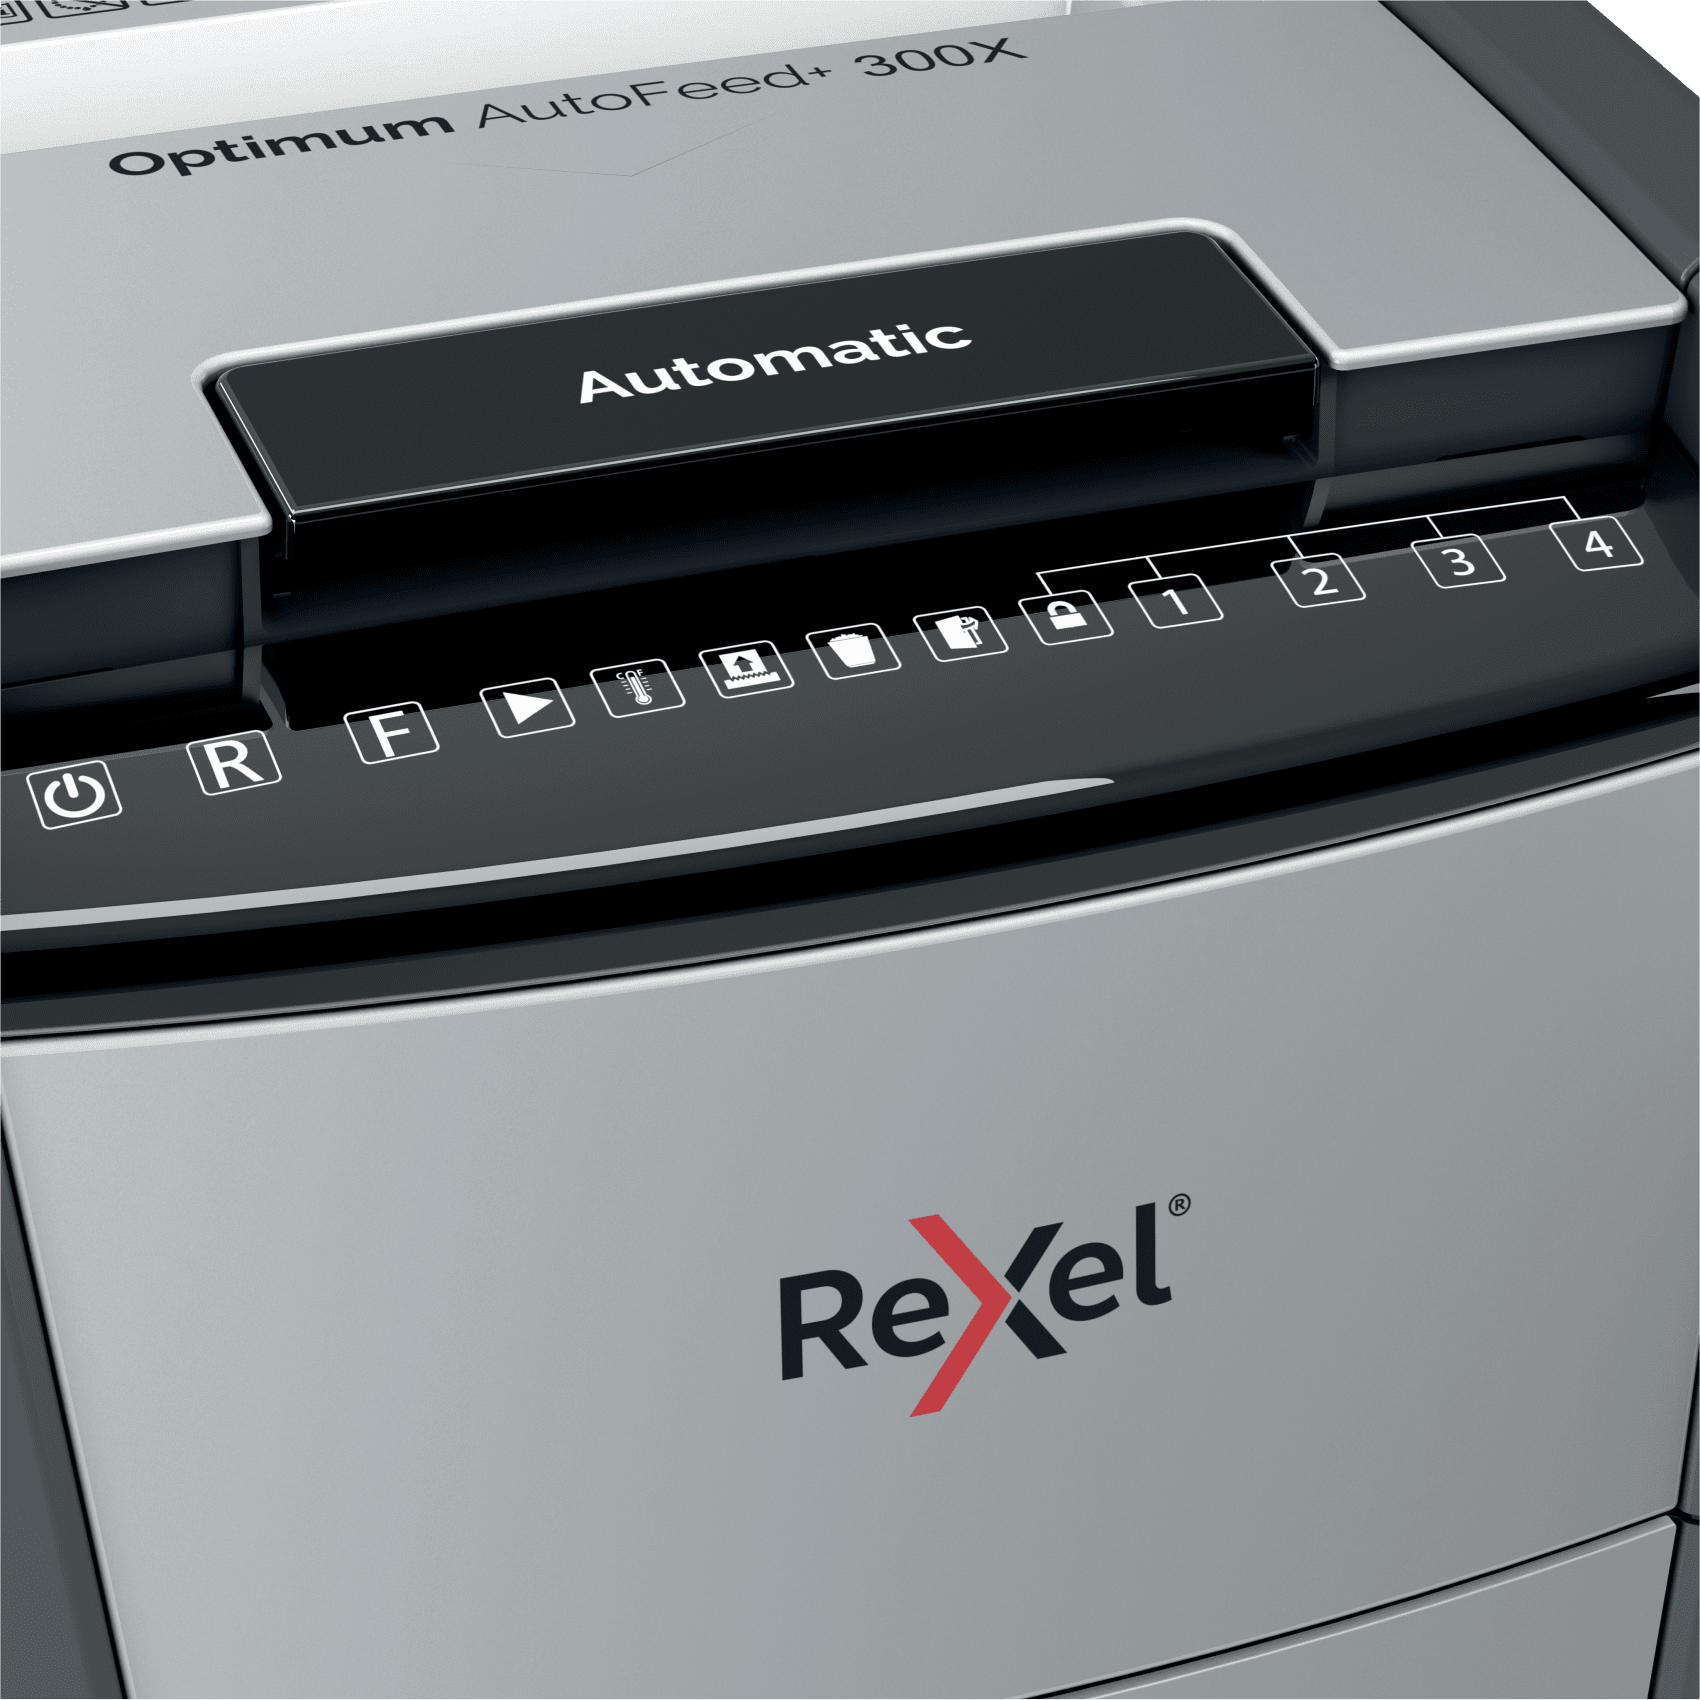 Rexel Optimum AutoFeed+ 300X Automatic Paper Shredder